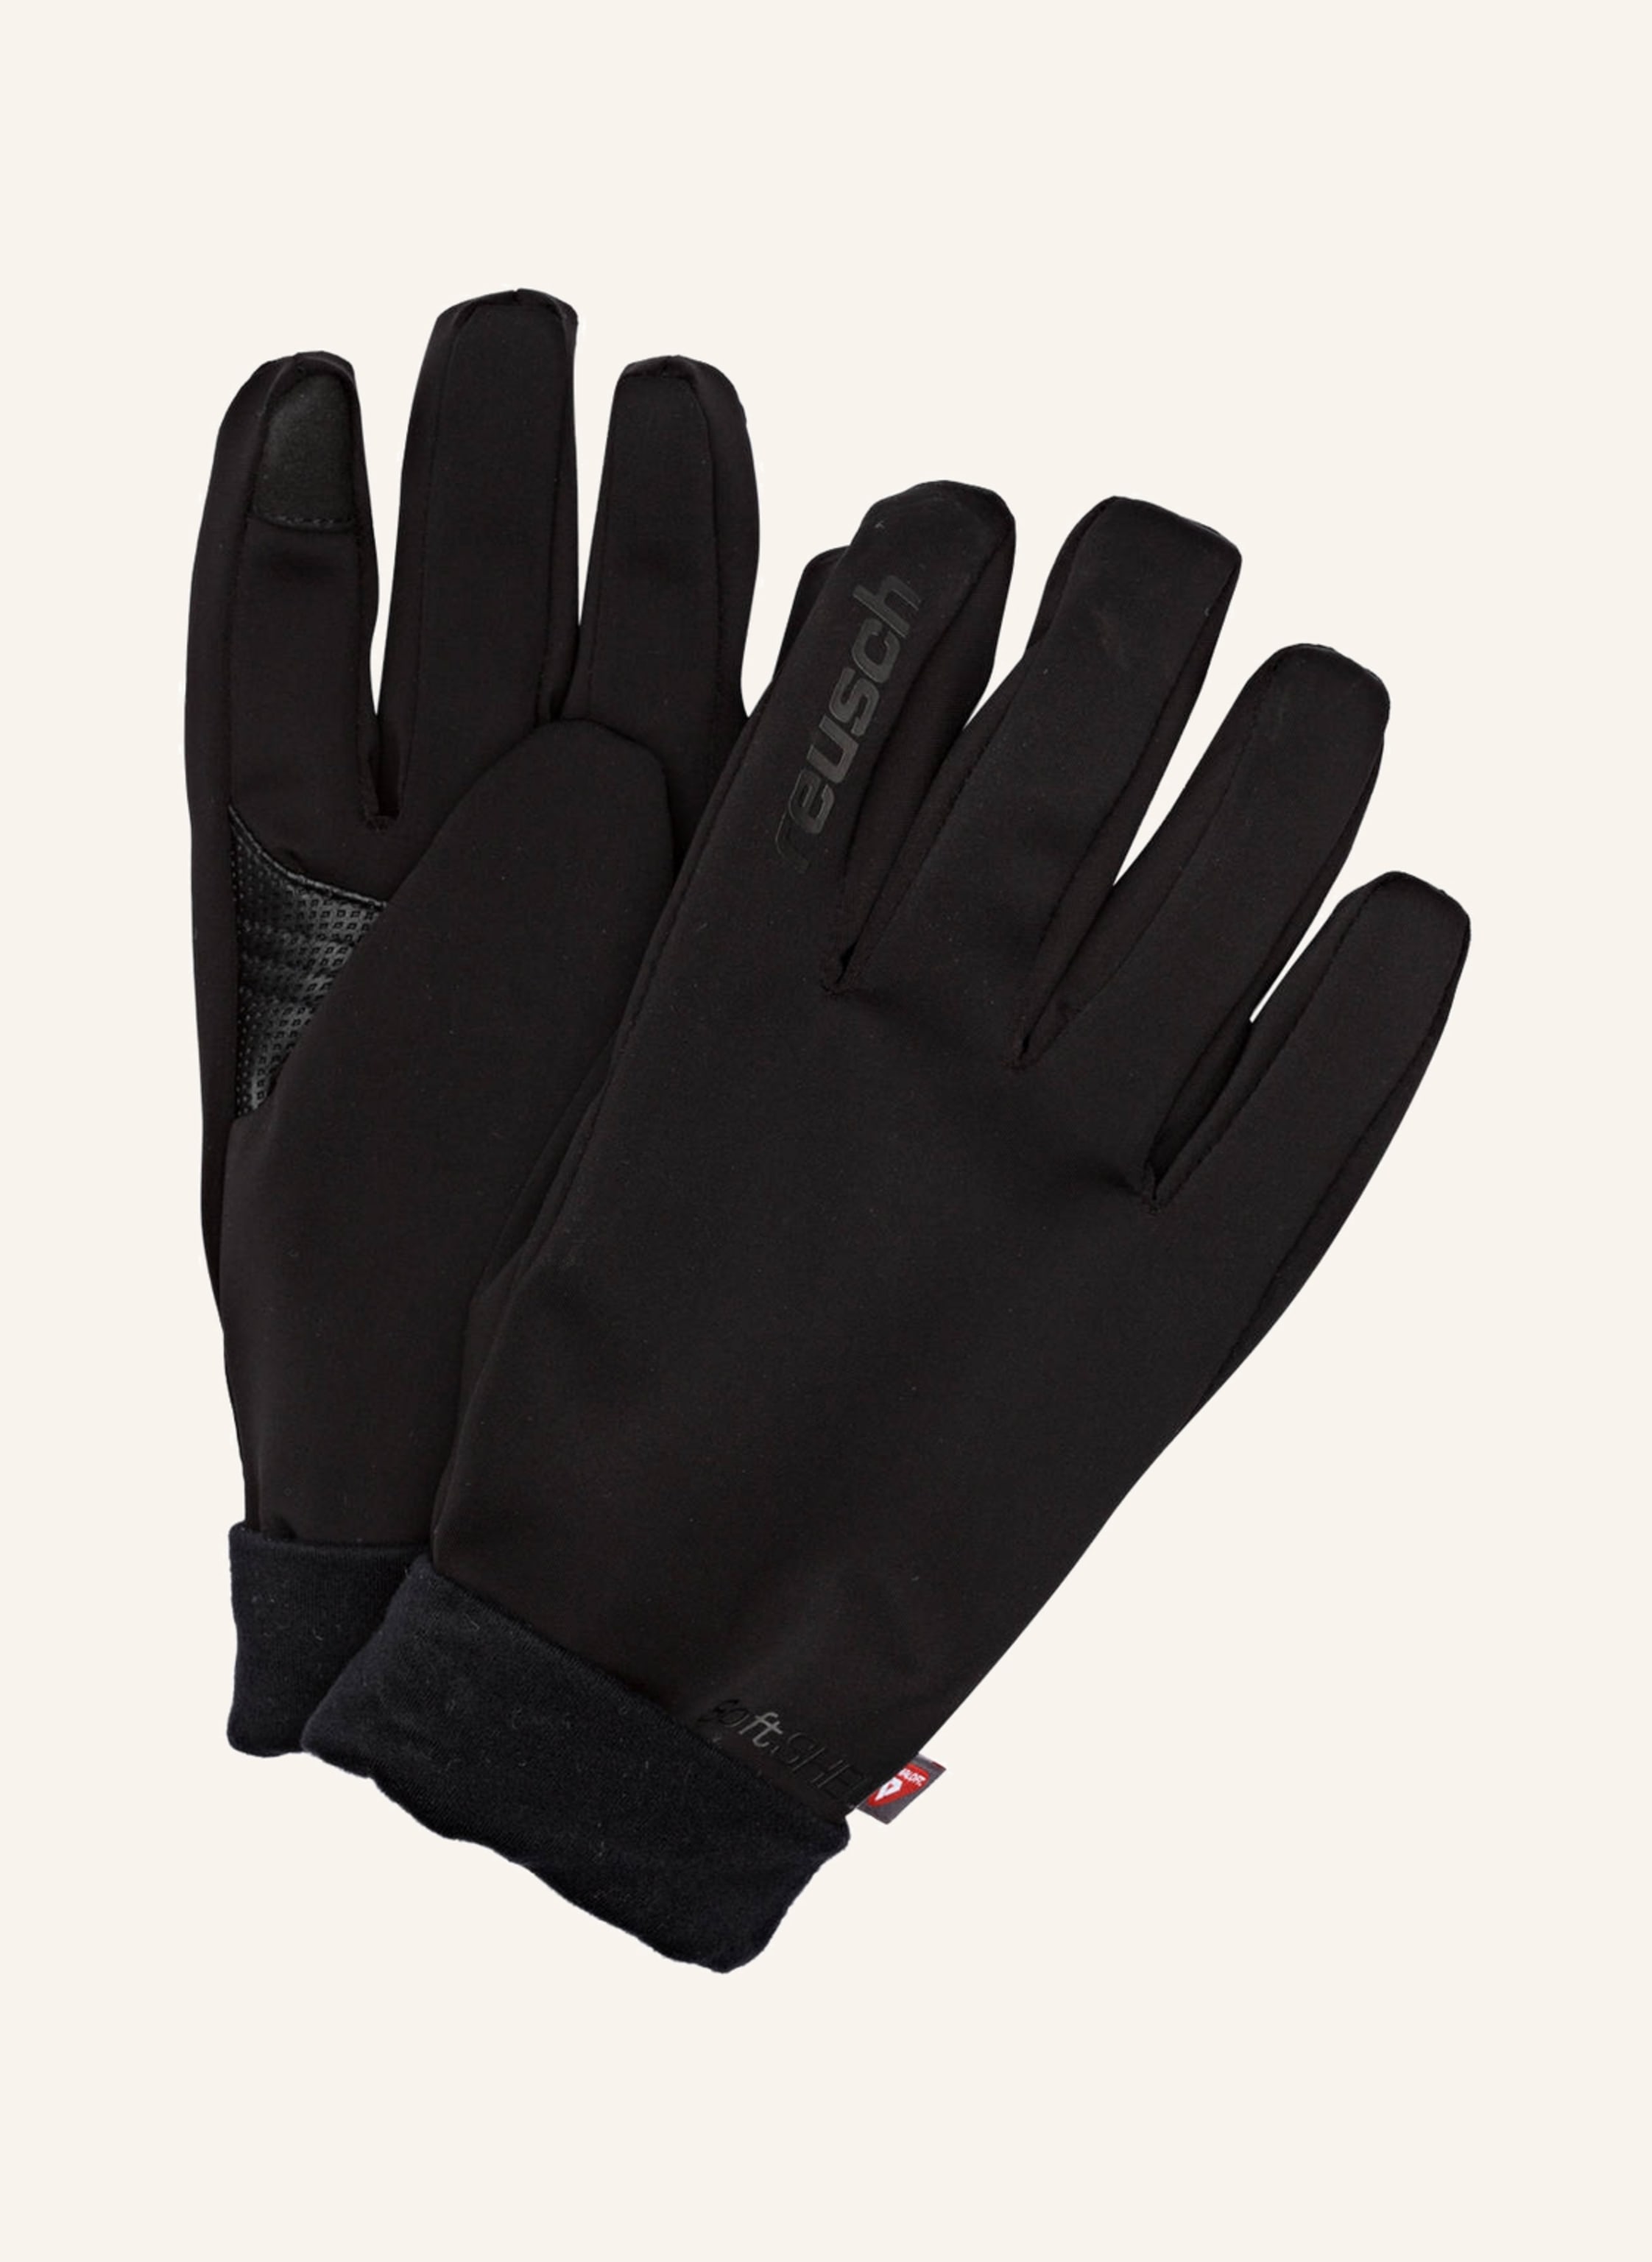 WALK TOUCH-TEC™ in schwarz reusch Multisport-Handschuhe